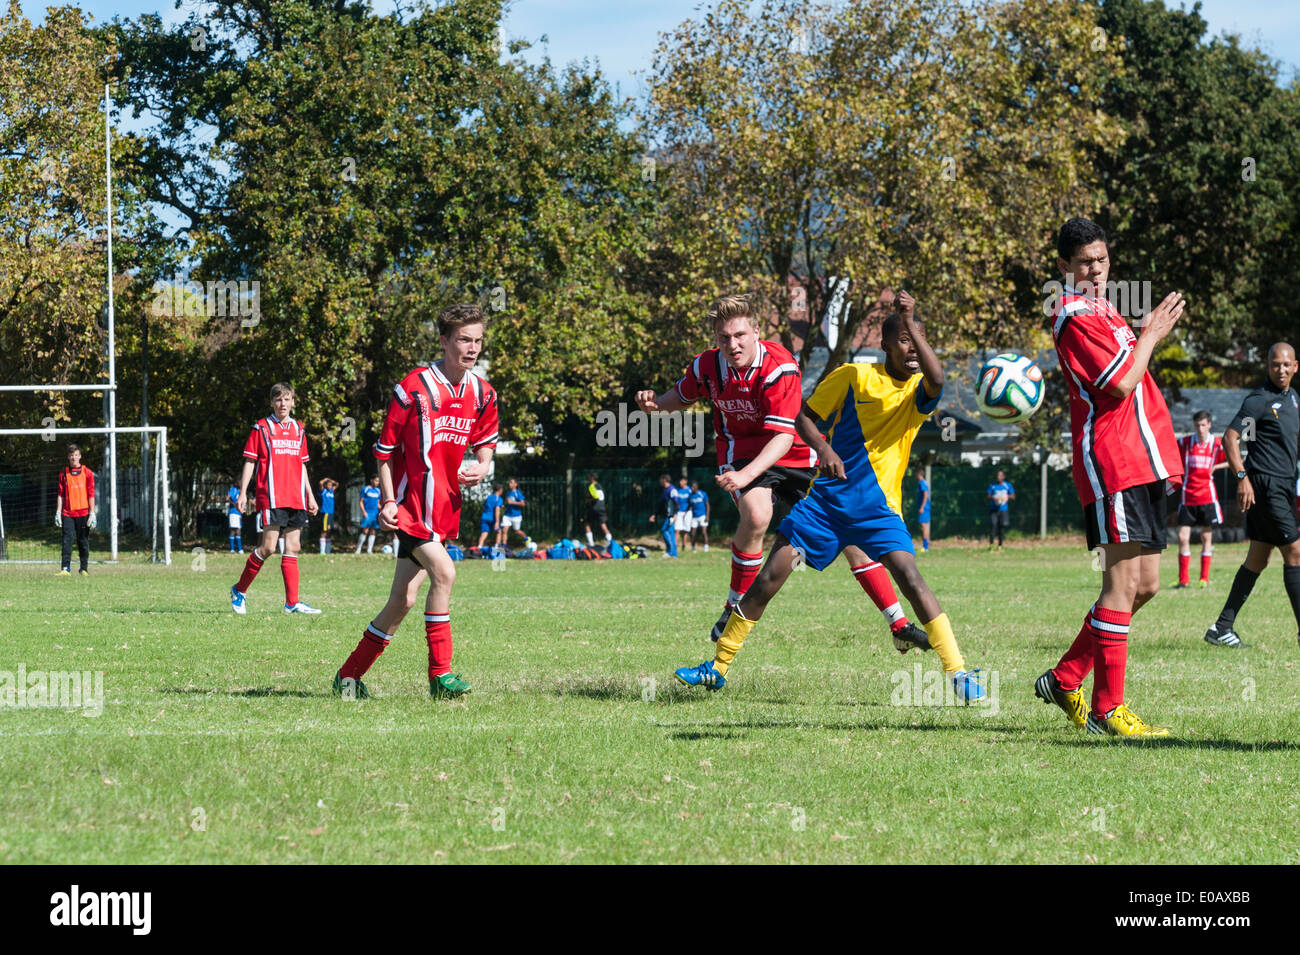 South African youth football team giocando contro una squadra tedesca (in rosso), Cape Town, Sud Africa Foto Stock